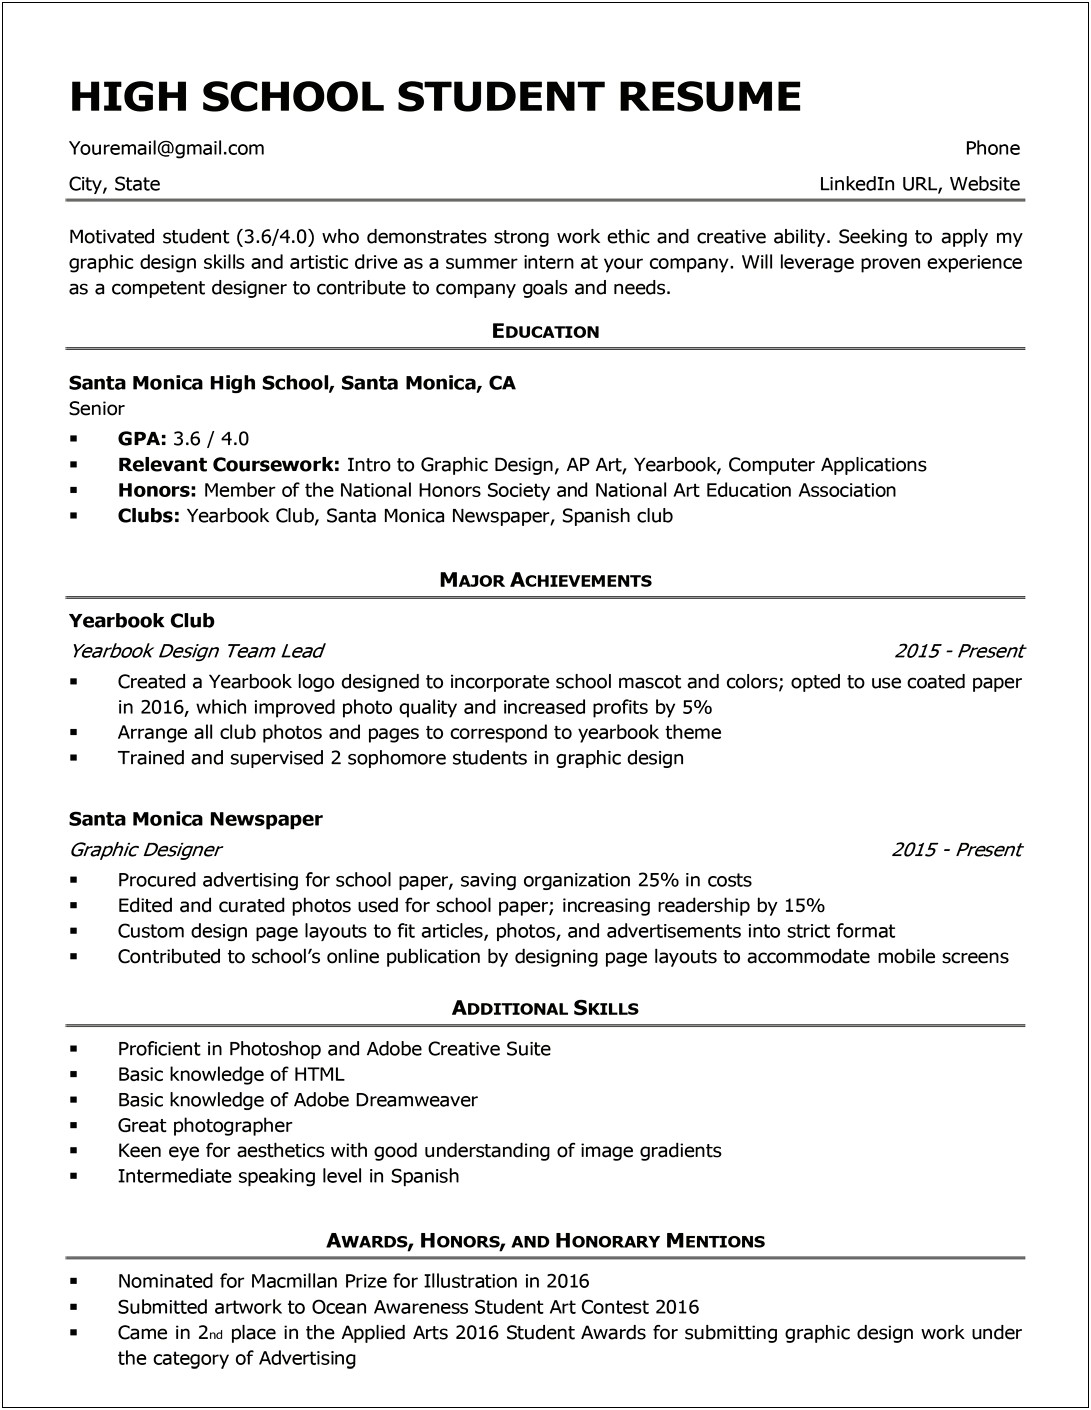 Sample Functional Resume For High School Student